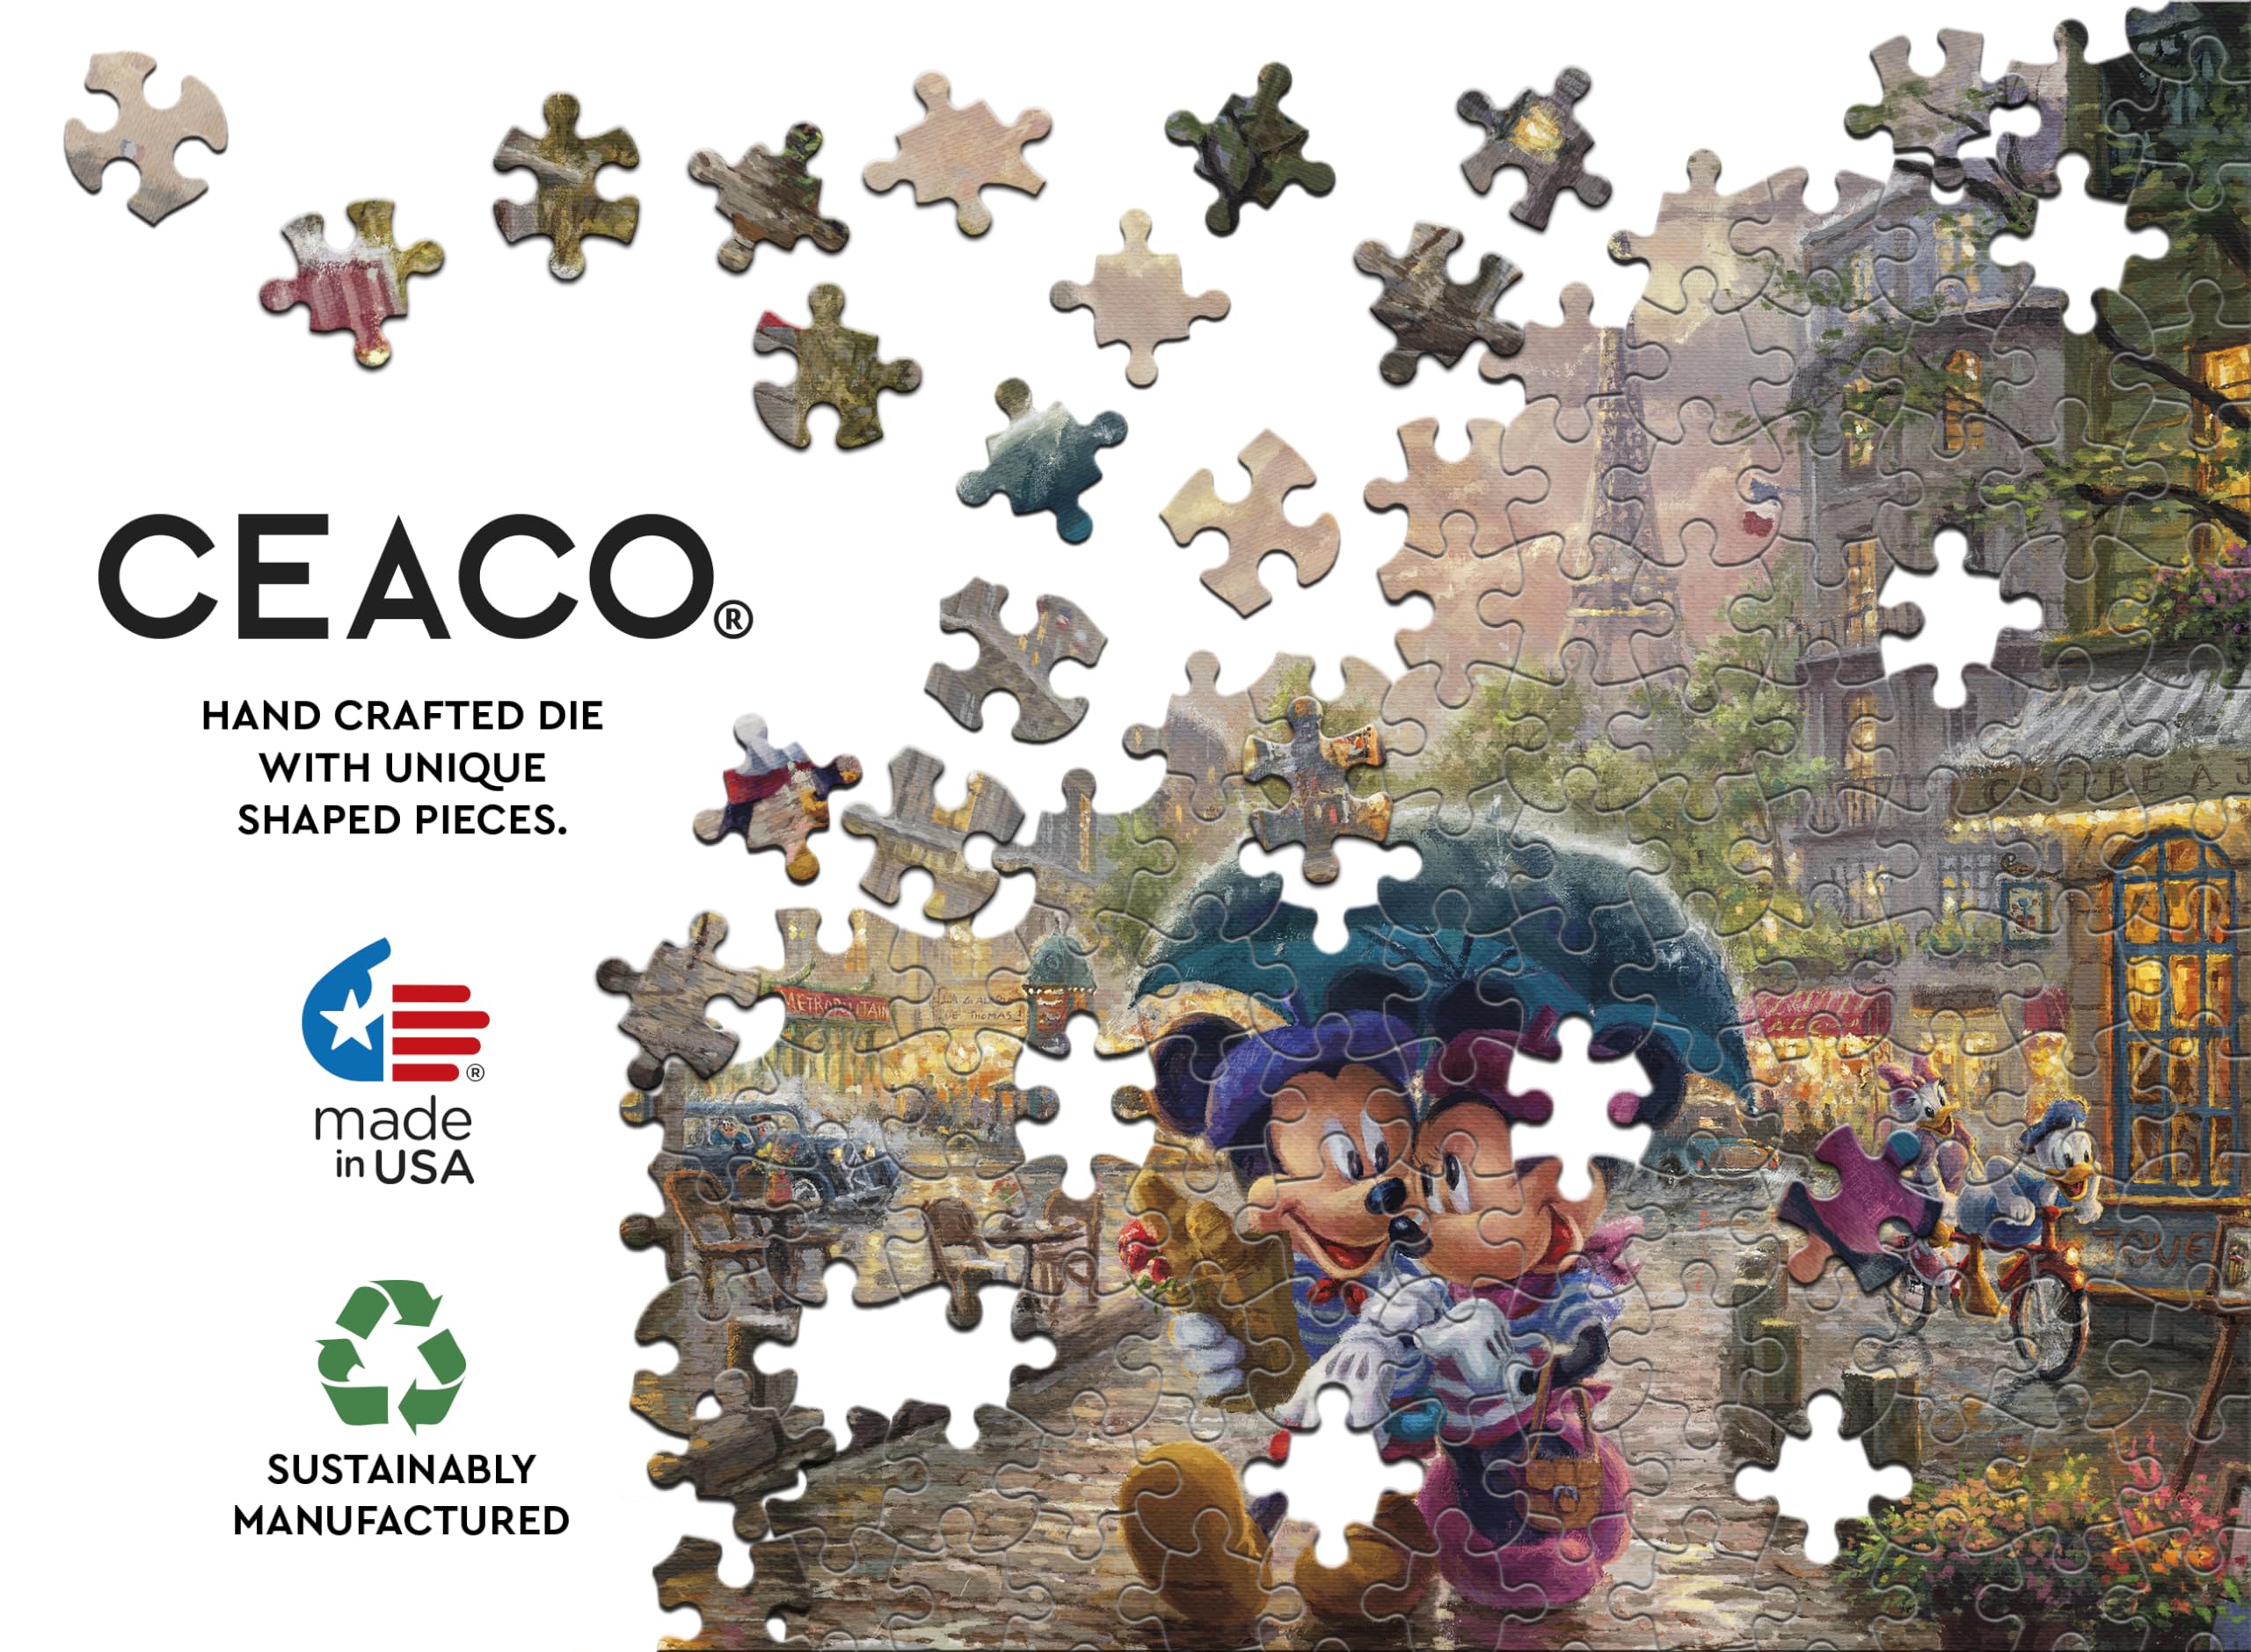 Ceaco - Thomas Kinkade - Disney - Mickey & Minnie in Paris - 1000 Piece Jigsaw Puzzle